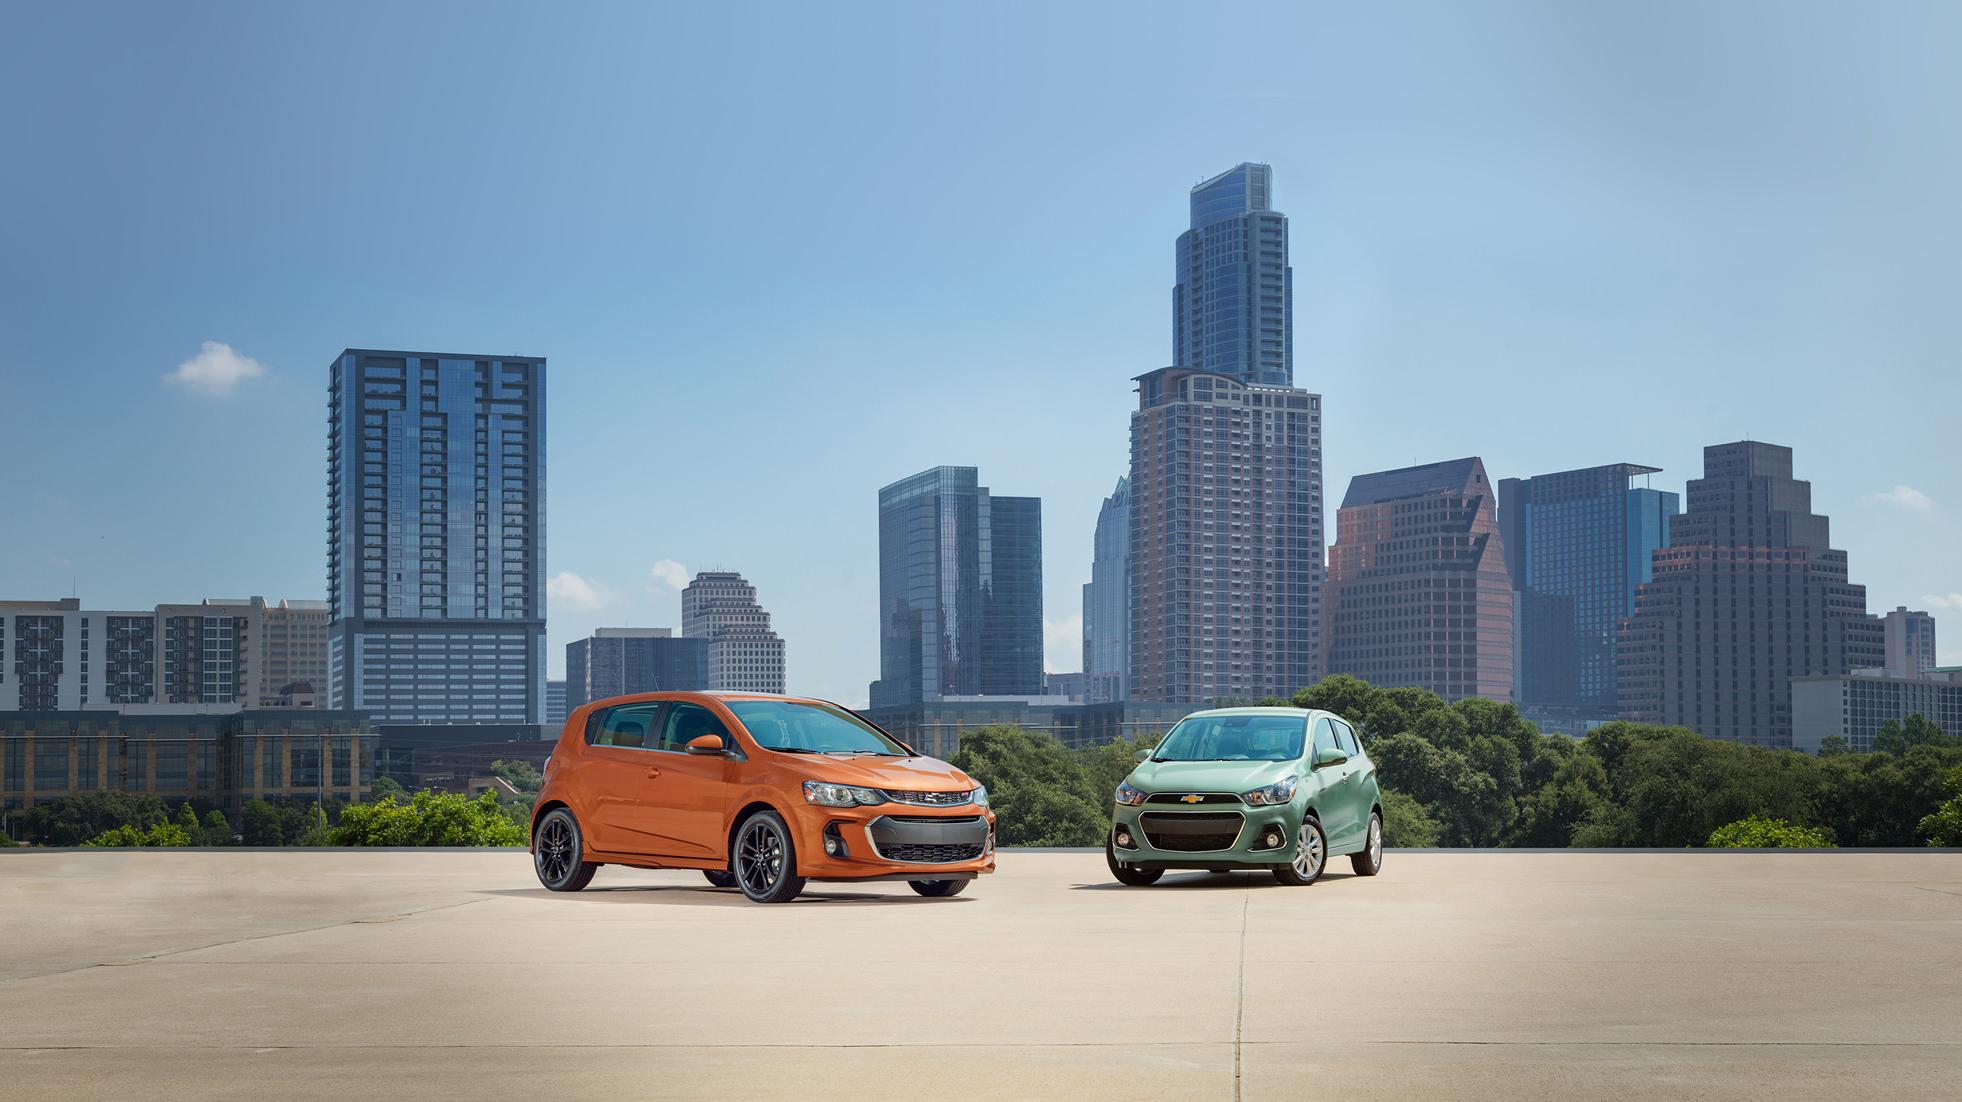 2018 Chevrolet Sonic Hatchback Premier | 2018 Chevrolet Spark LT | Lifestyle | City Buildings